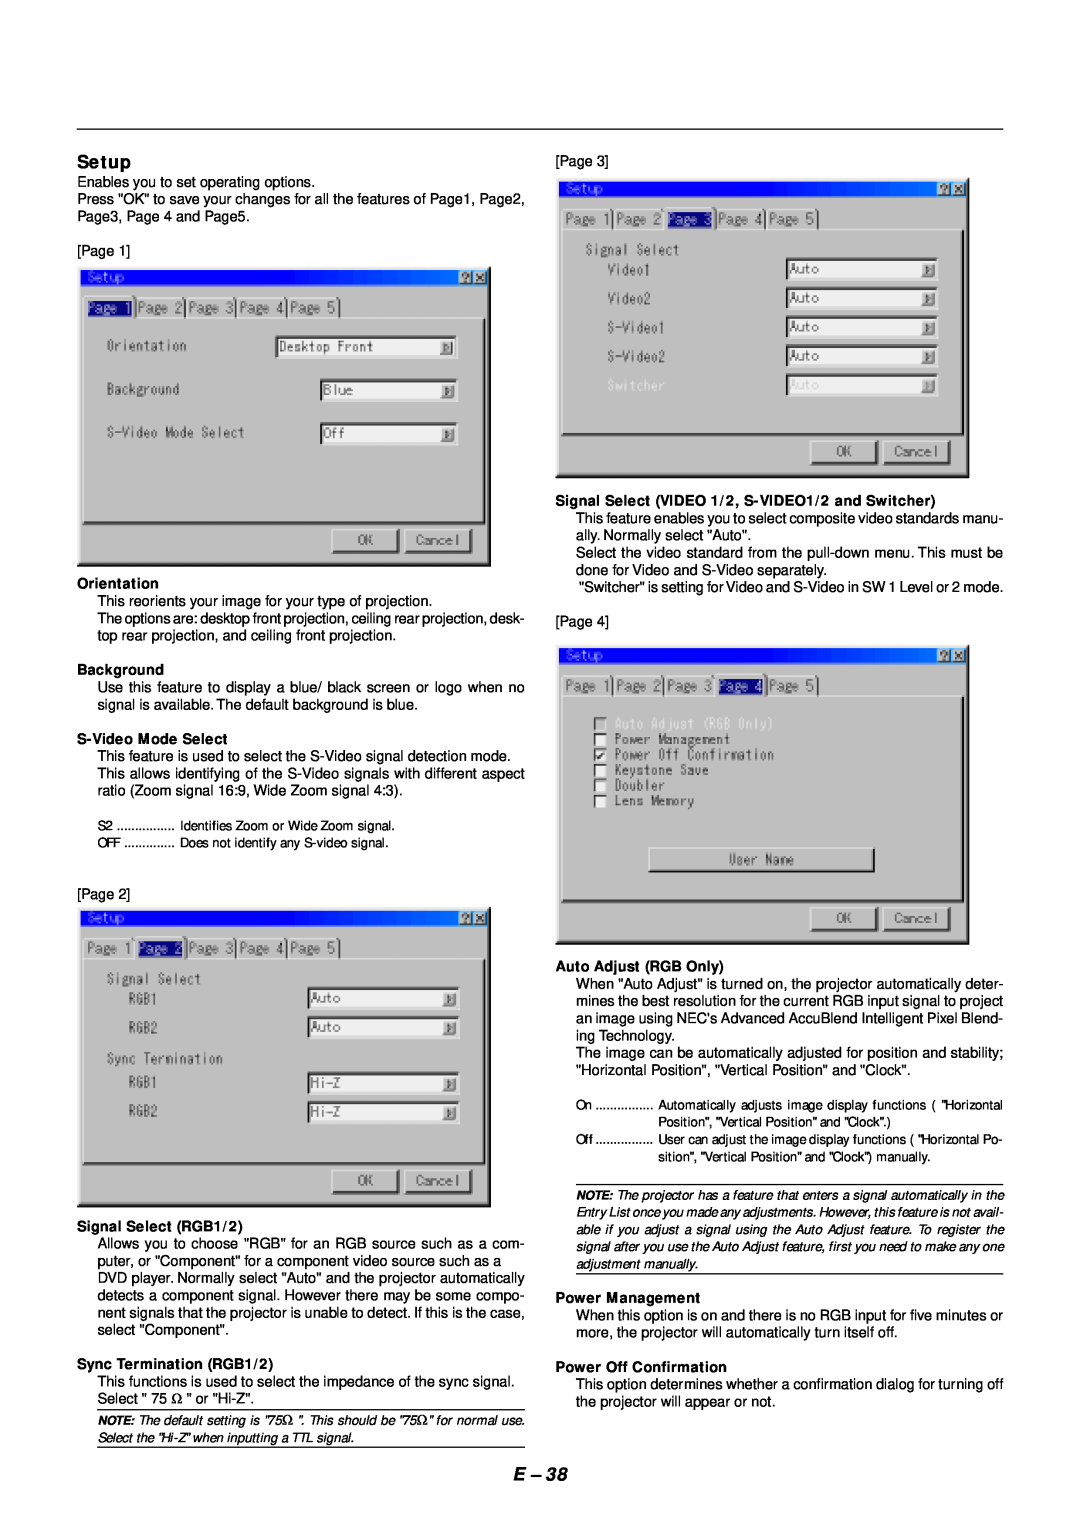 NEC SX4000 user manual Setup, Orientation, Background, S-Video Mode Select, Signal Select RGB1/2, Sync Termination RGB1/2 